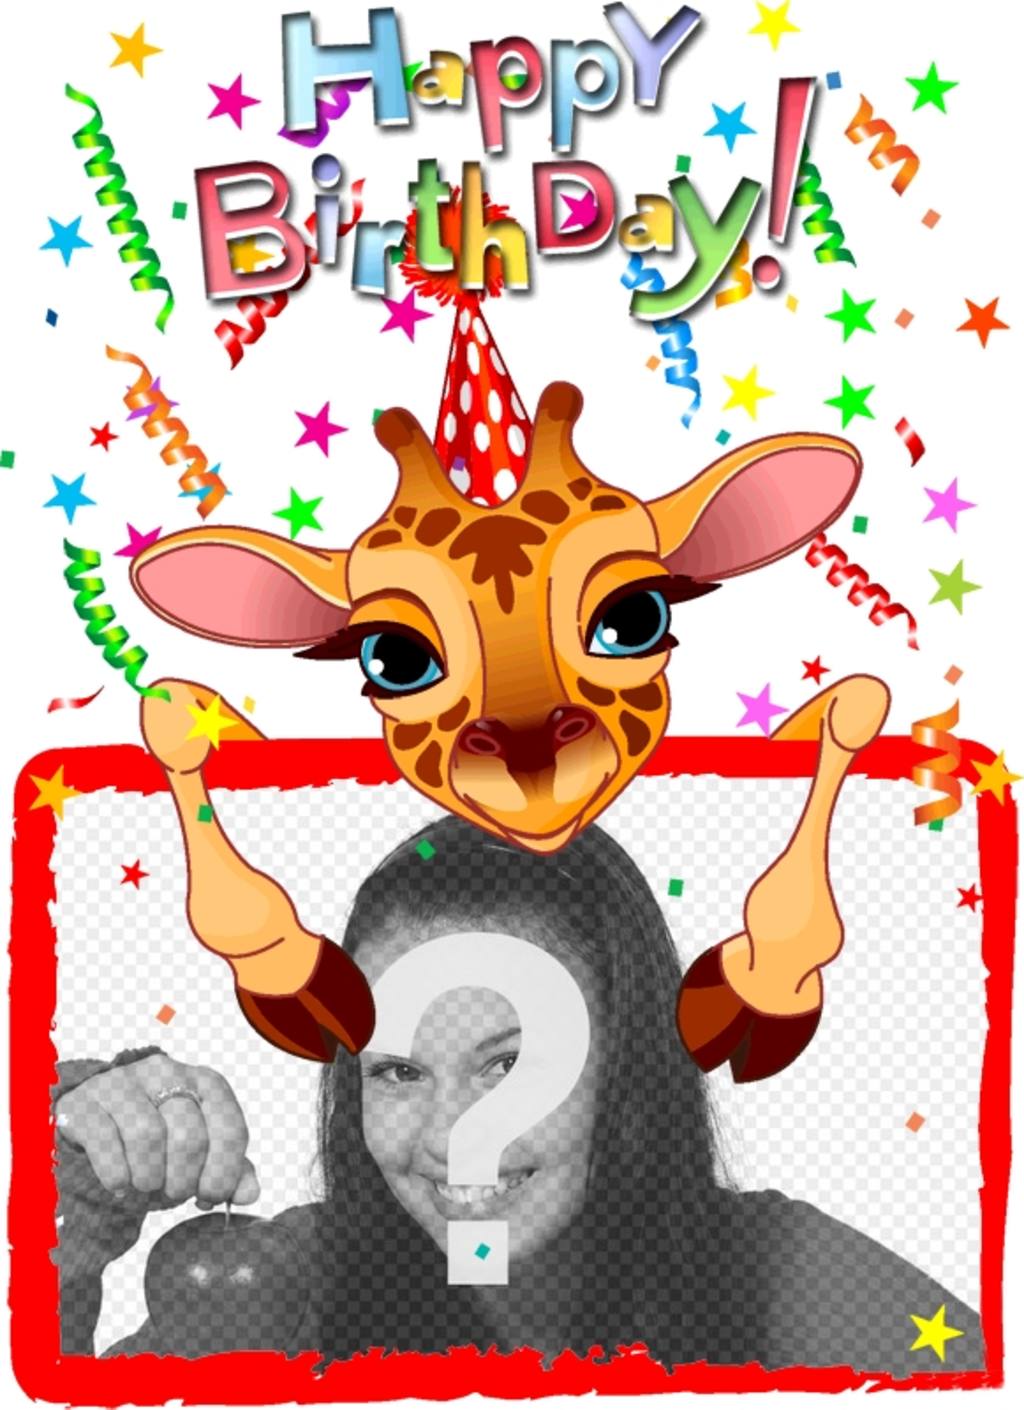 Customizable greeting card with a giraffe birthday. ..